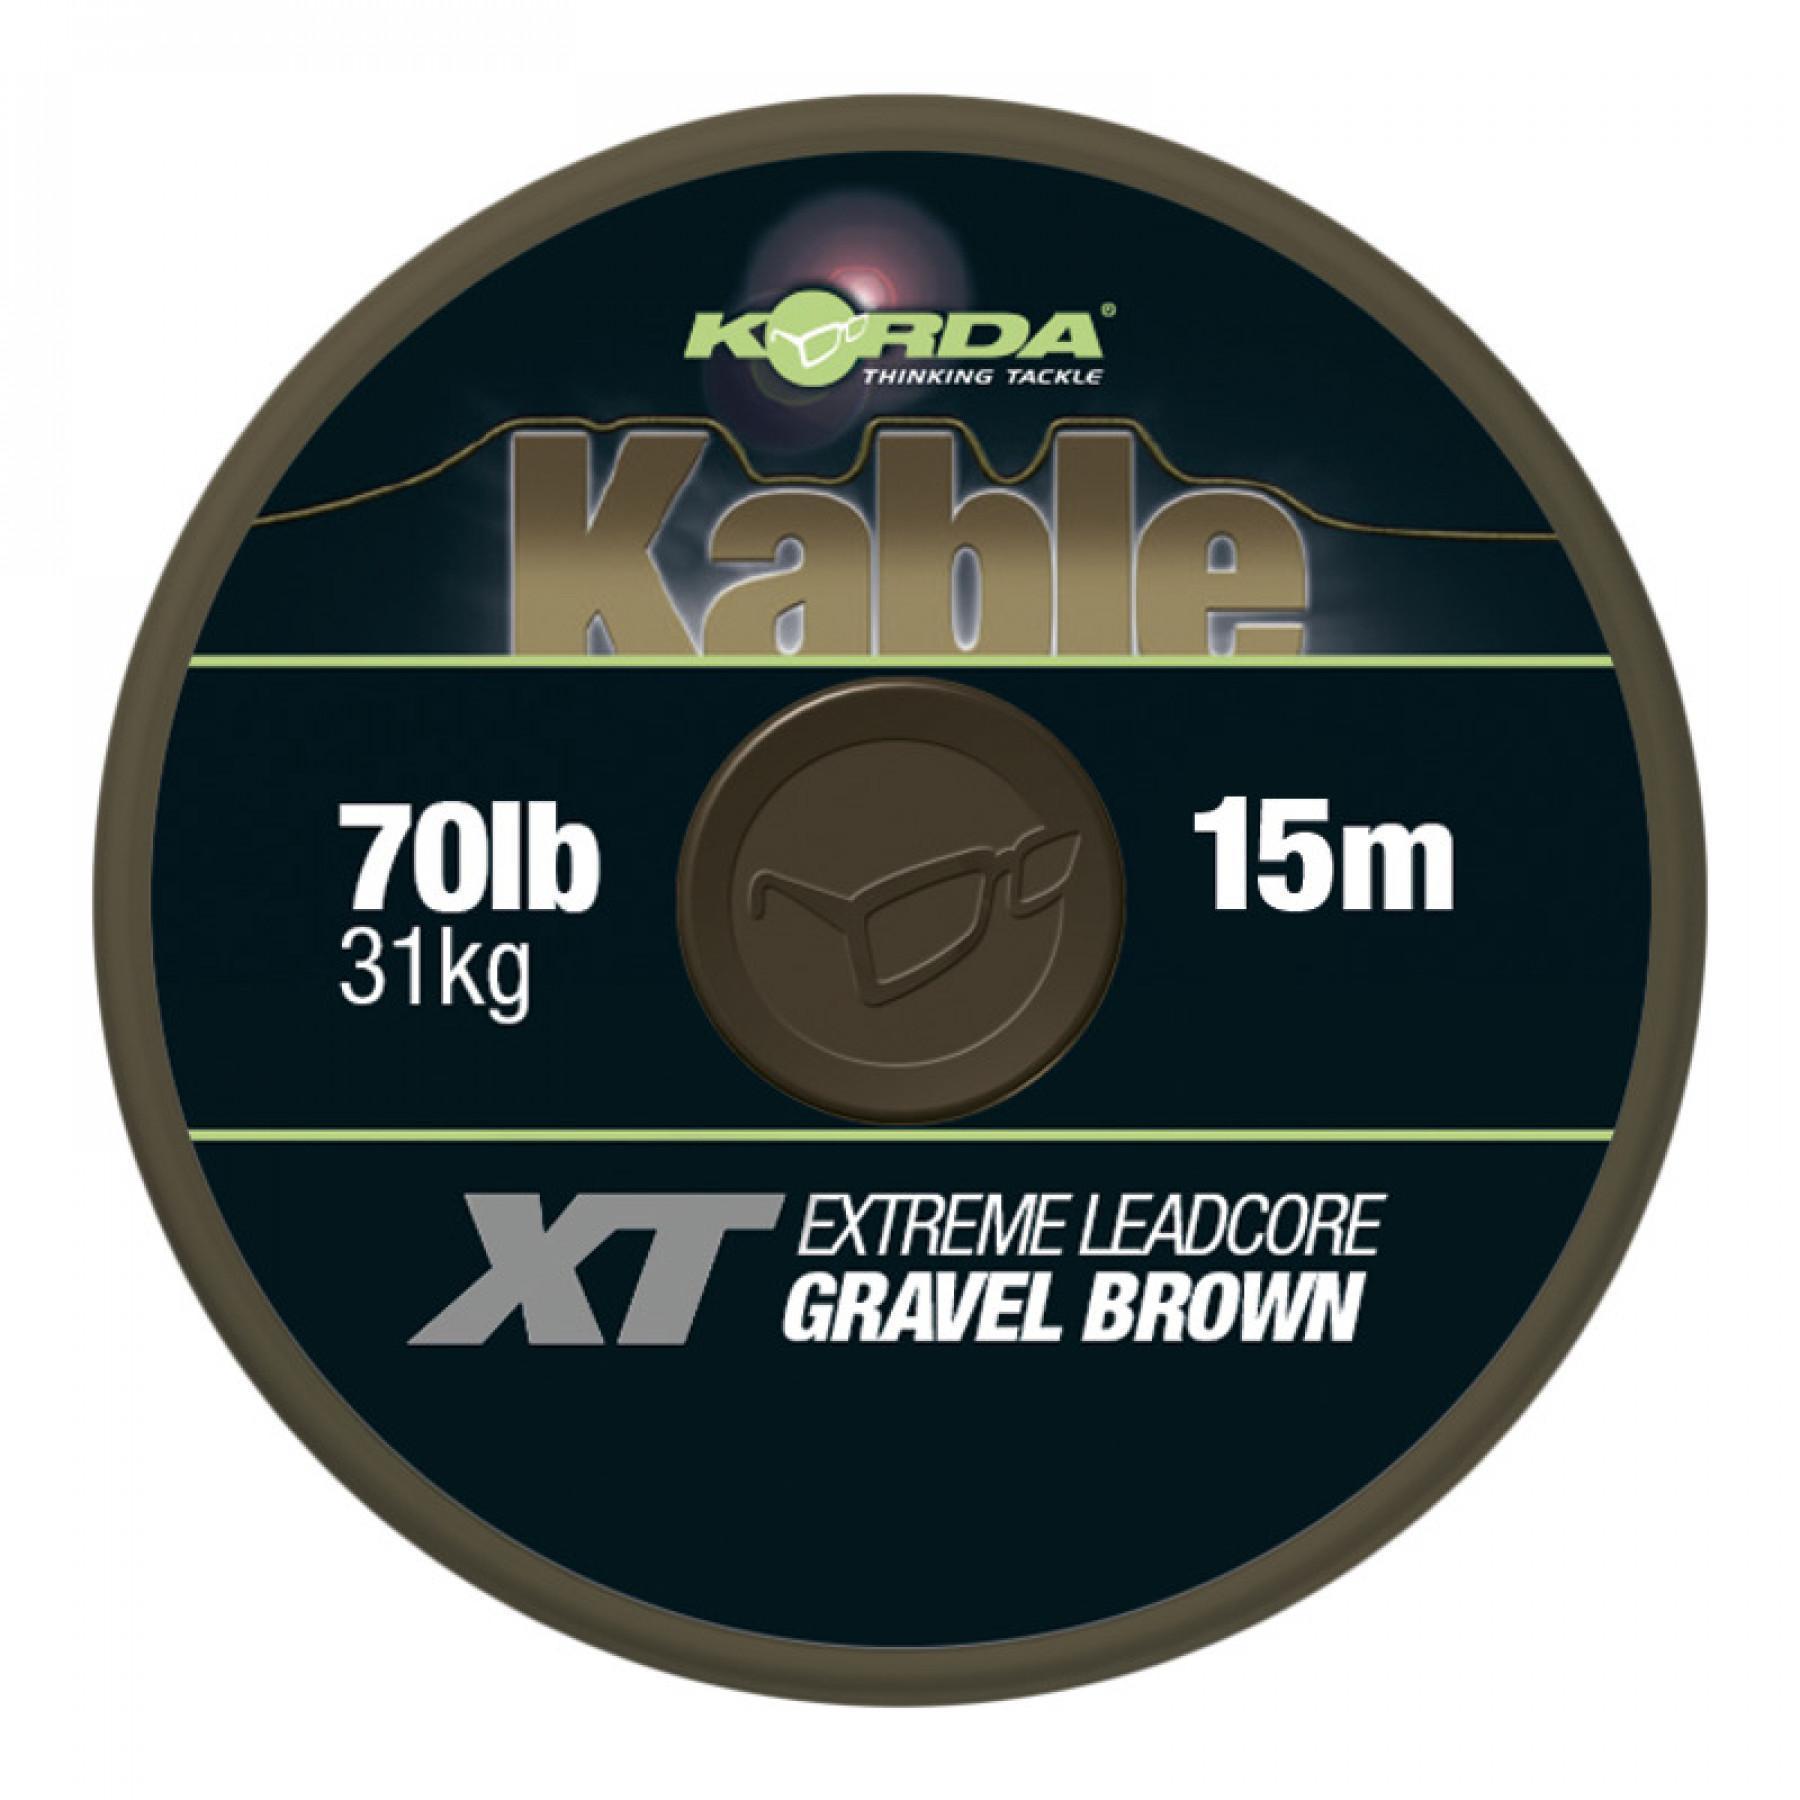 Kable xt Korda Extreme Leadcore Gravel Brown